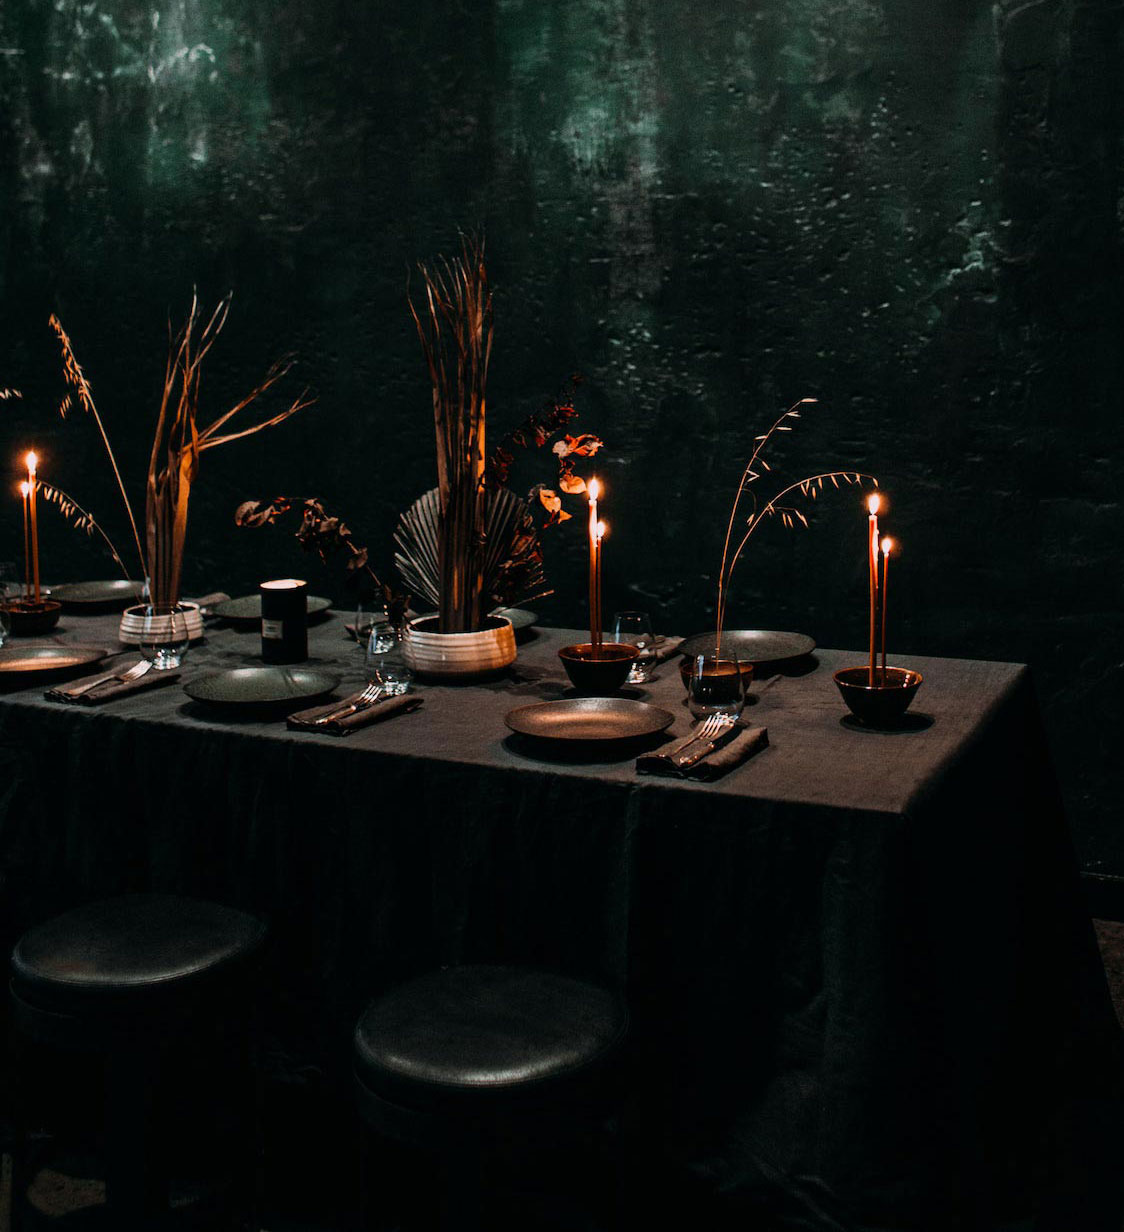 Banquet table in dark atmosphere